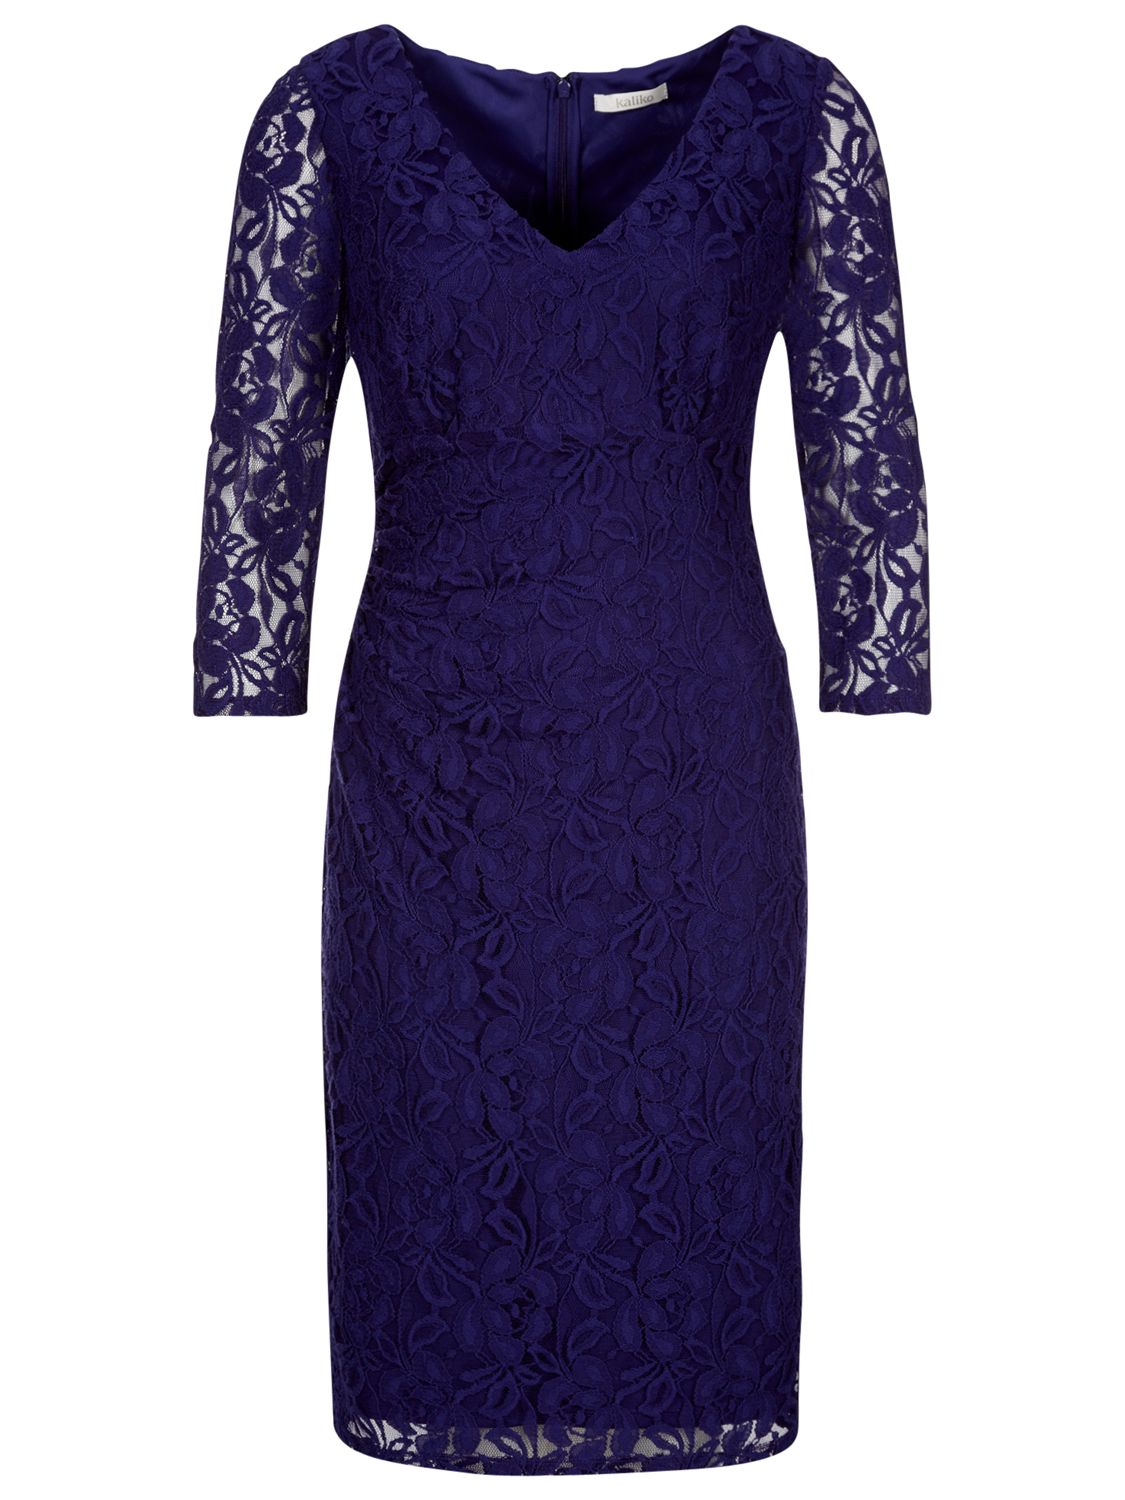 Kaliko Lace Shift Dress, Purple at John Lewis & Partners